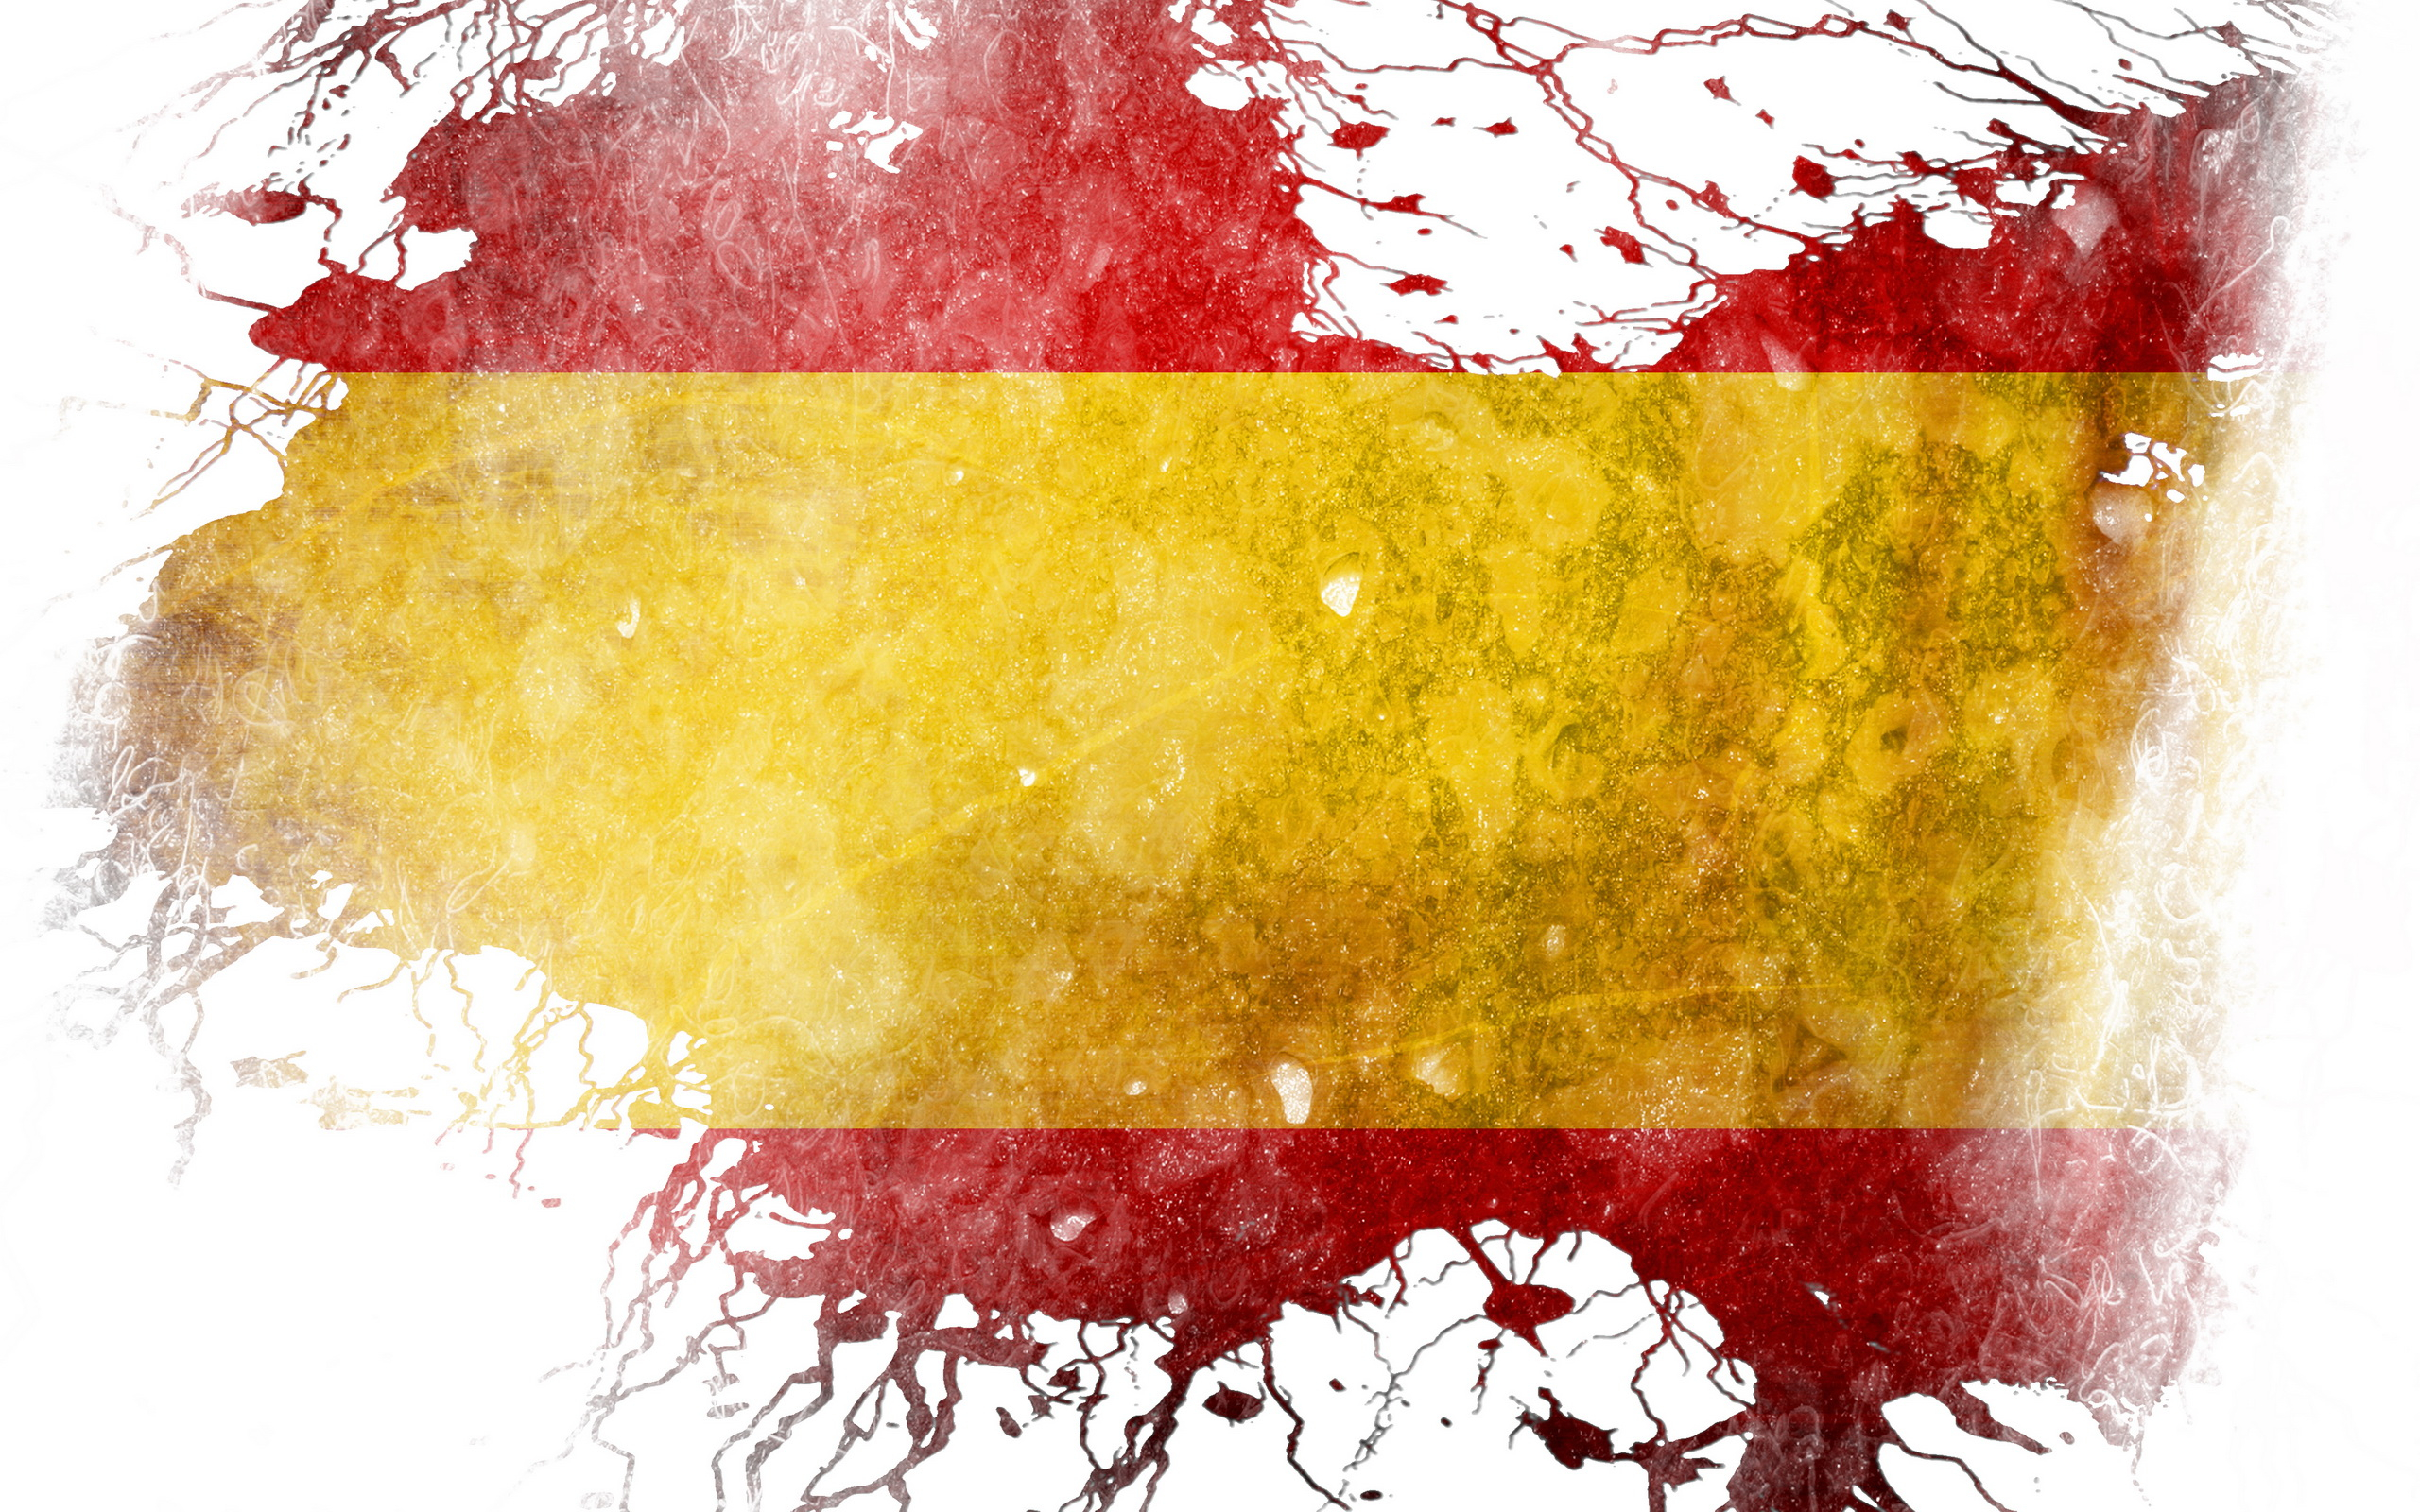 2560x1600 Flag Of Spain HD Wallpaper